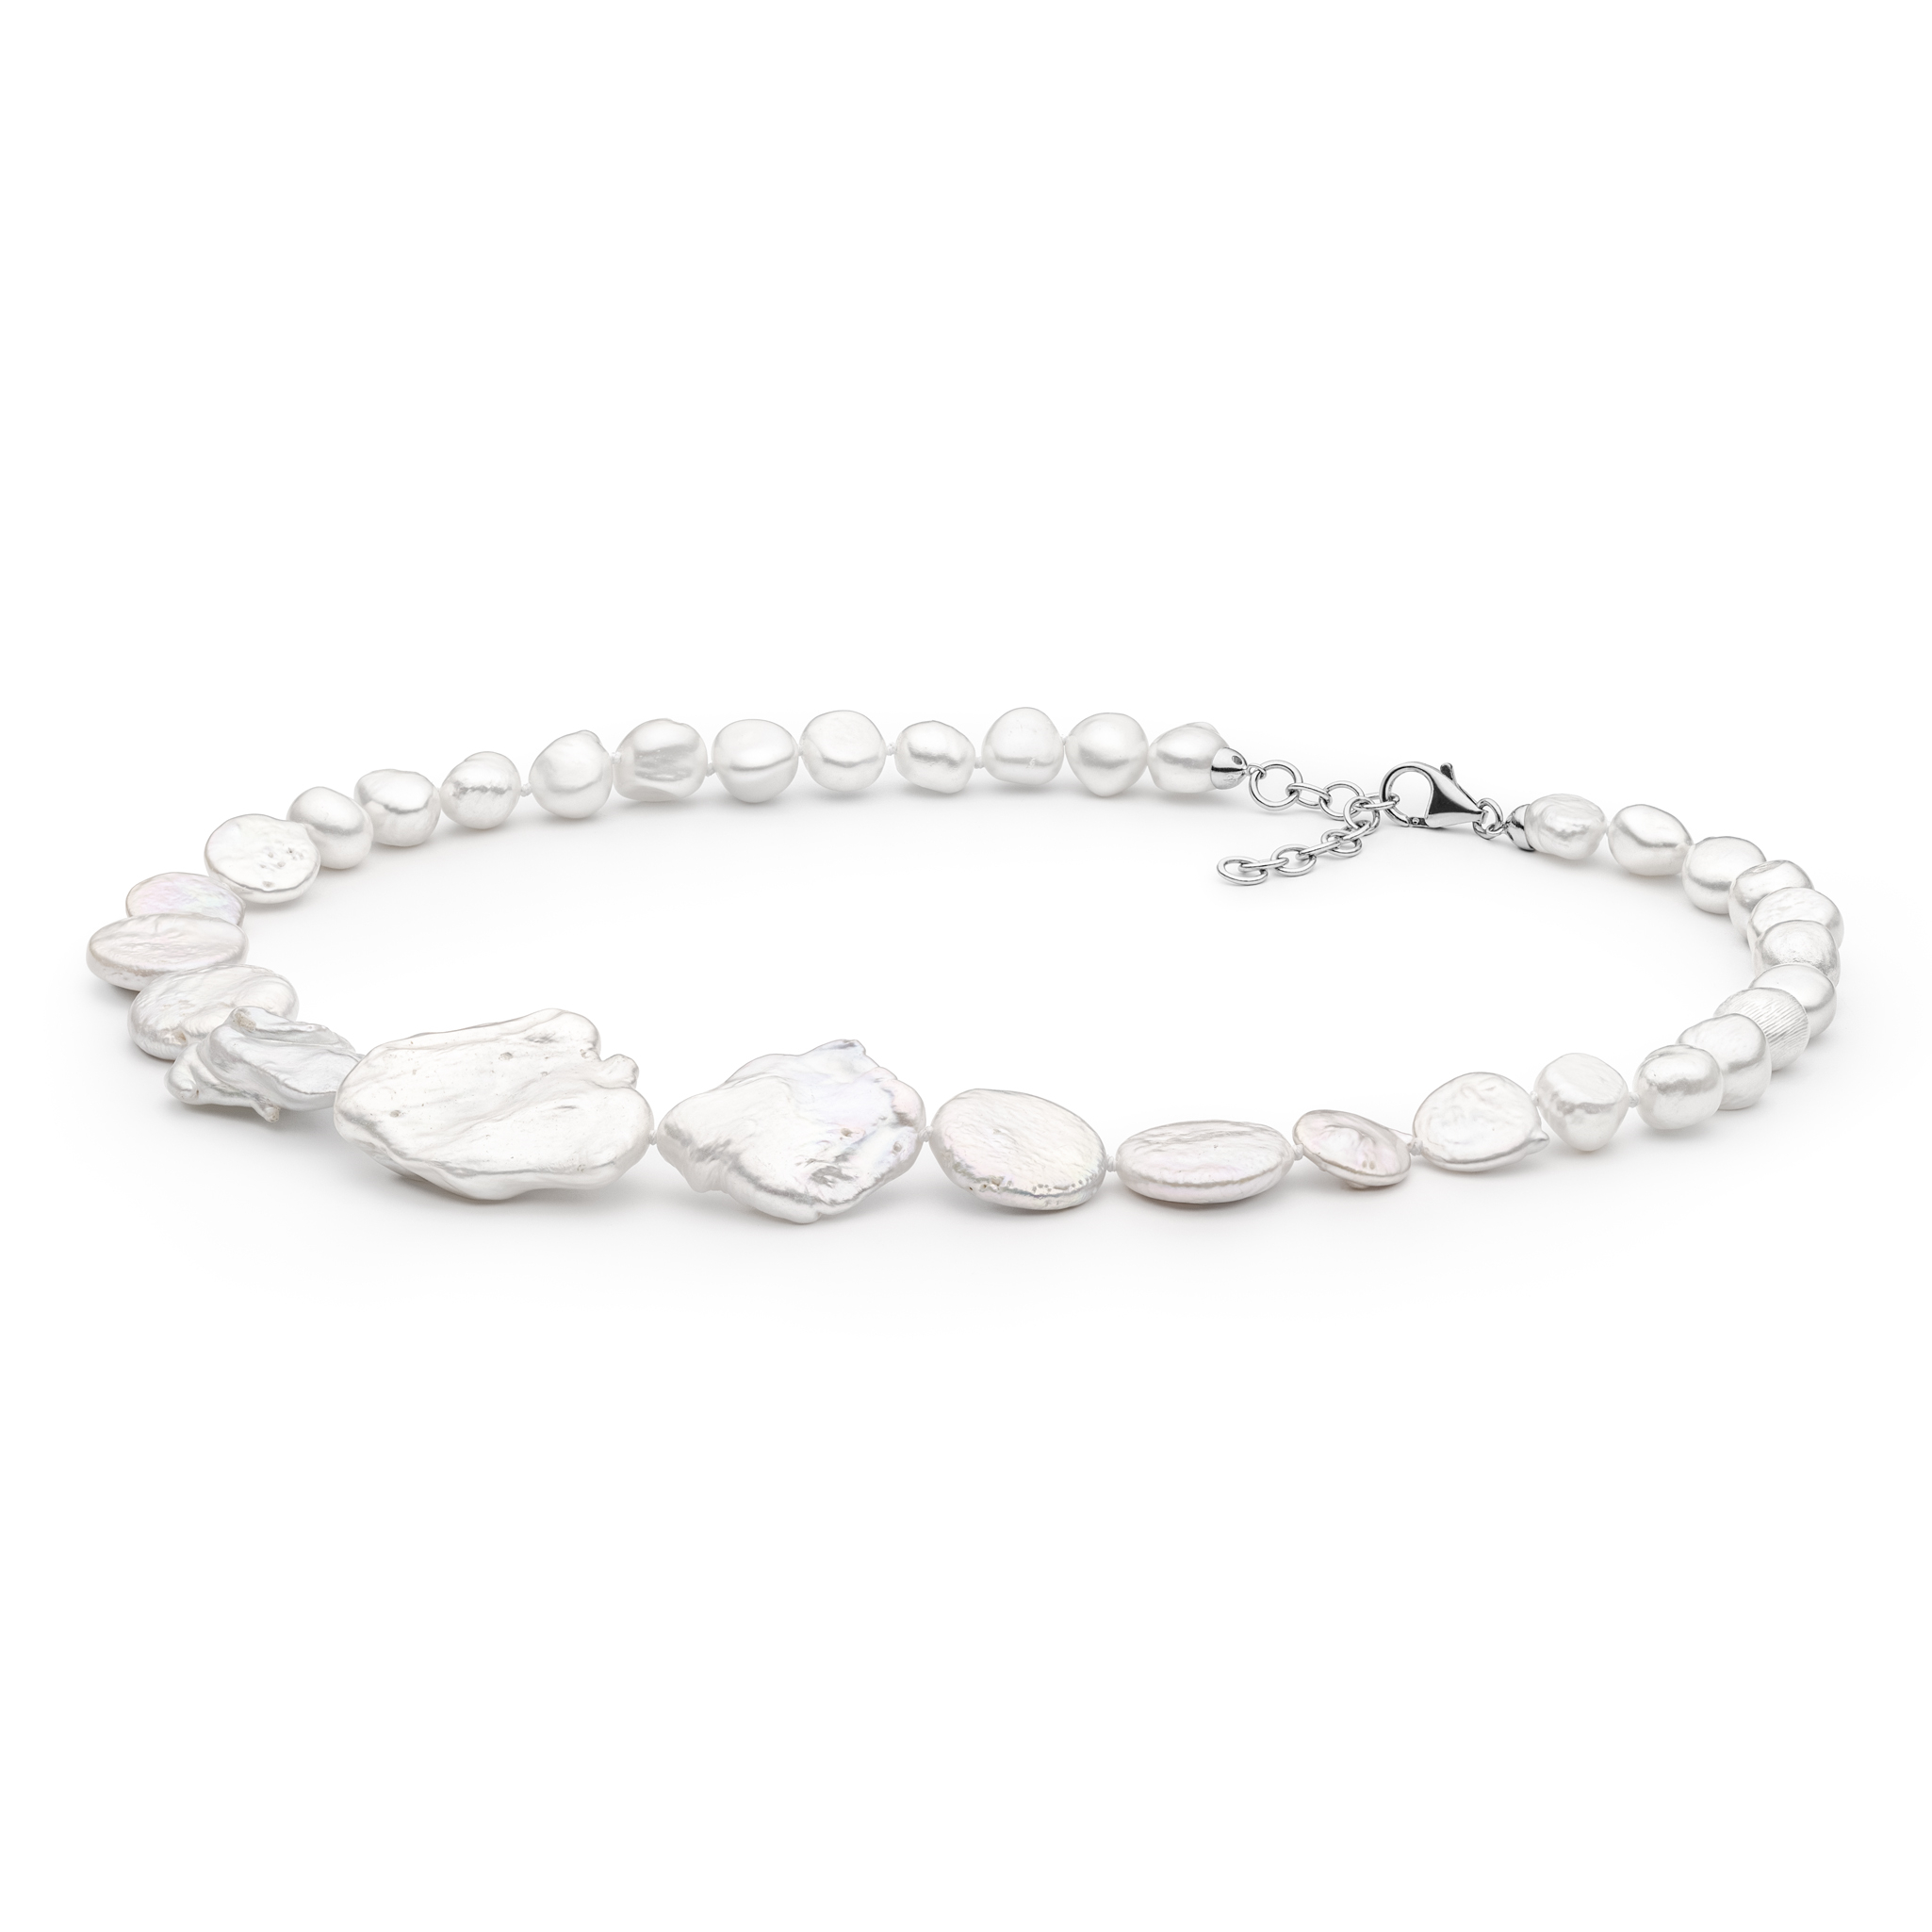 Strieborný náhrdelník s plochými nepravidelnými perlami